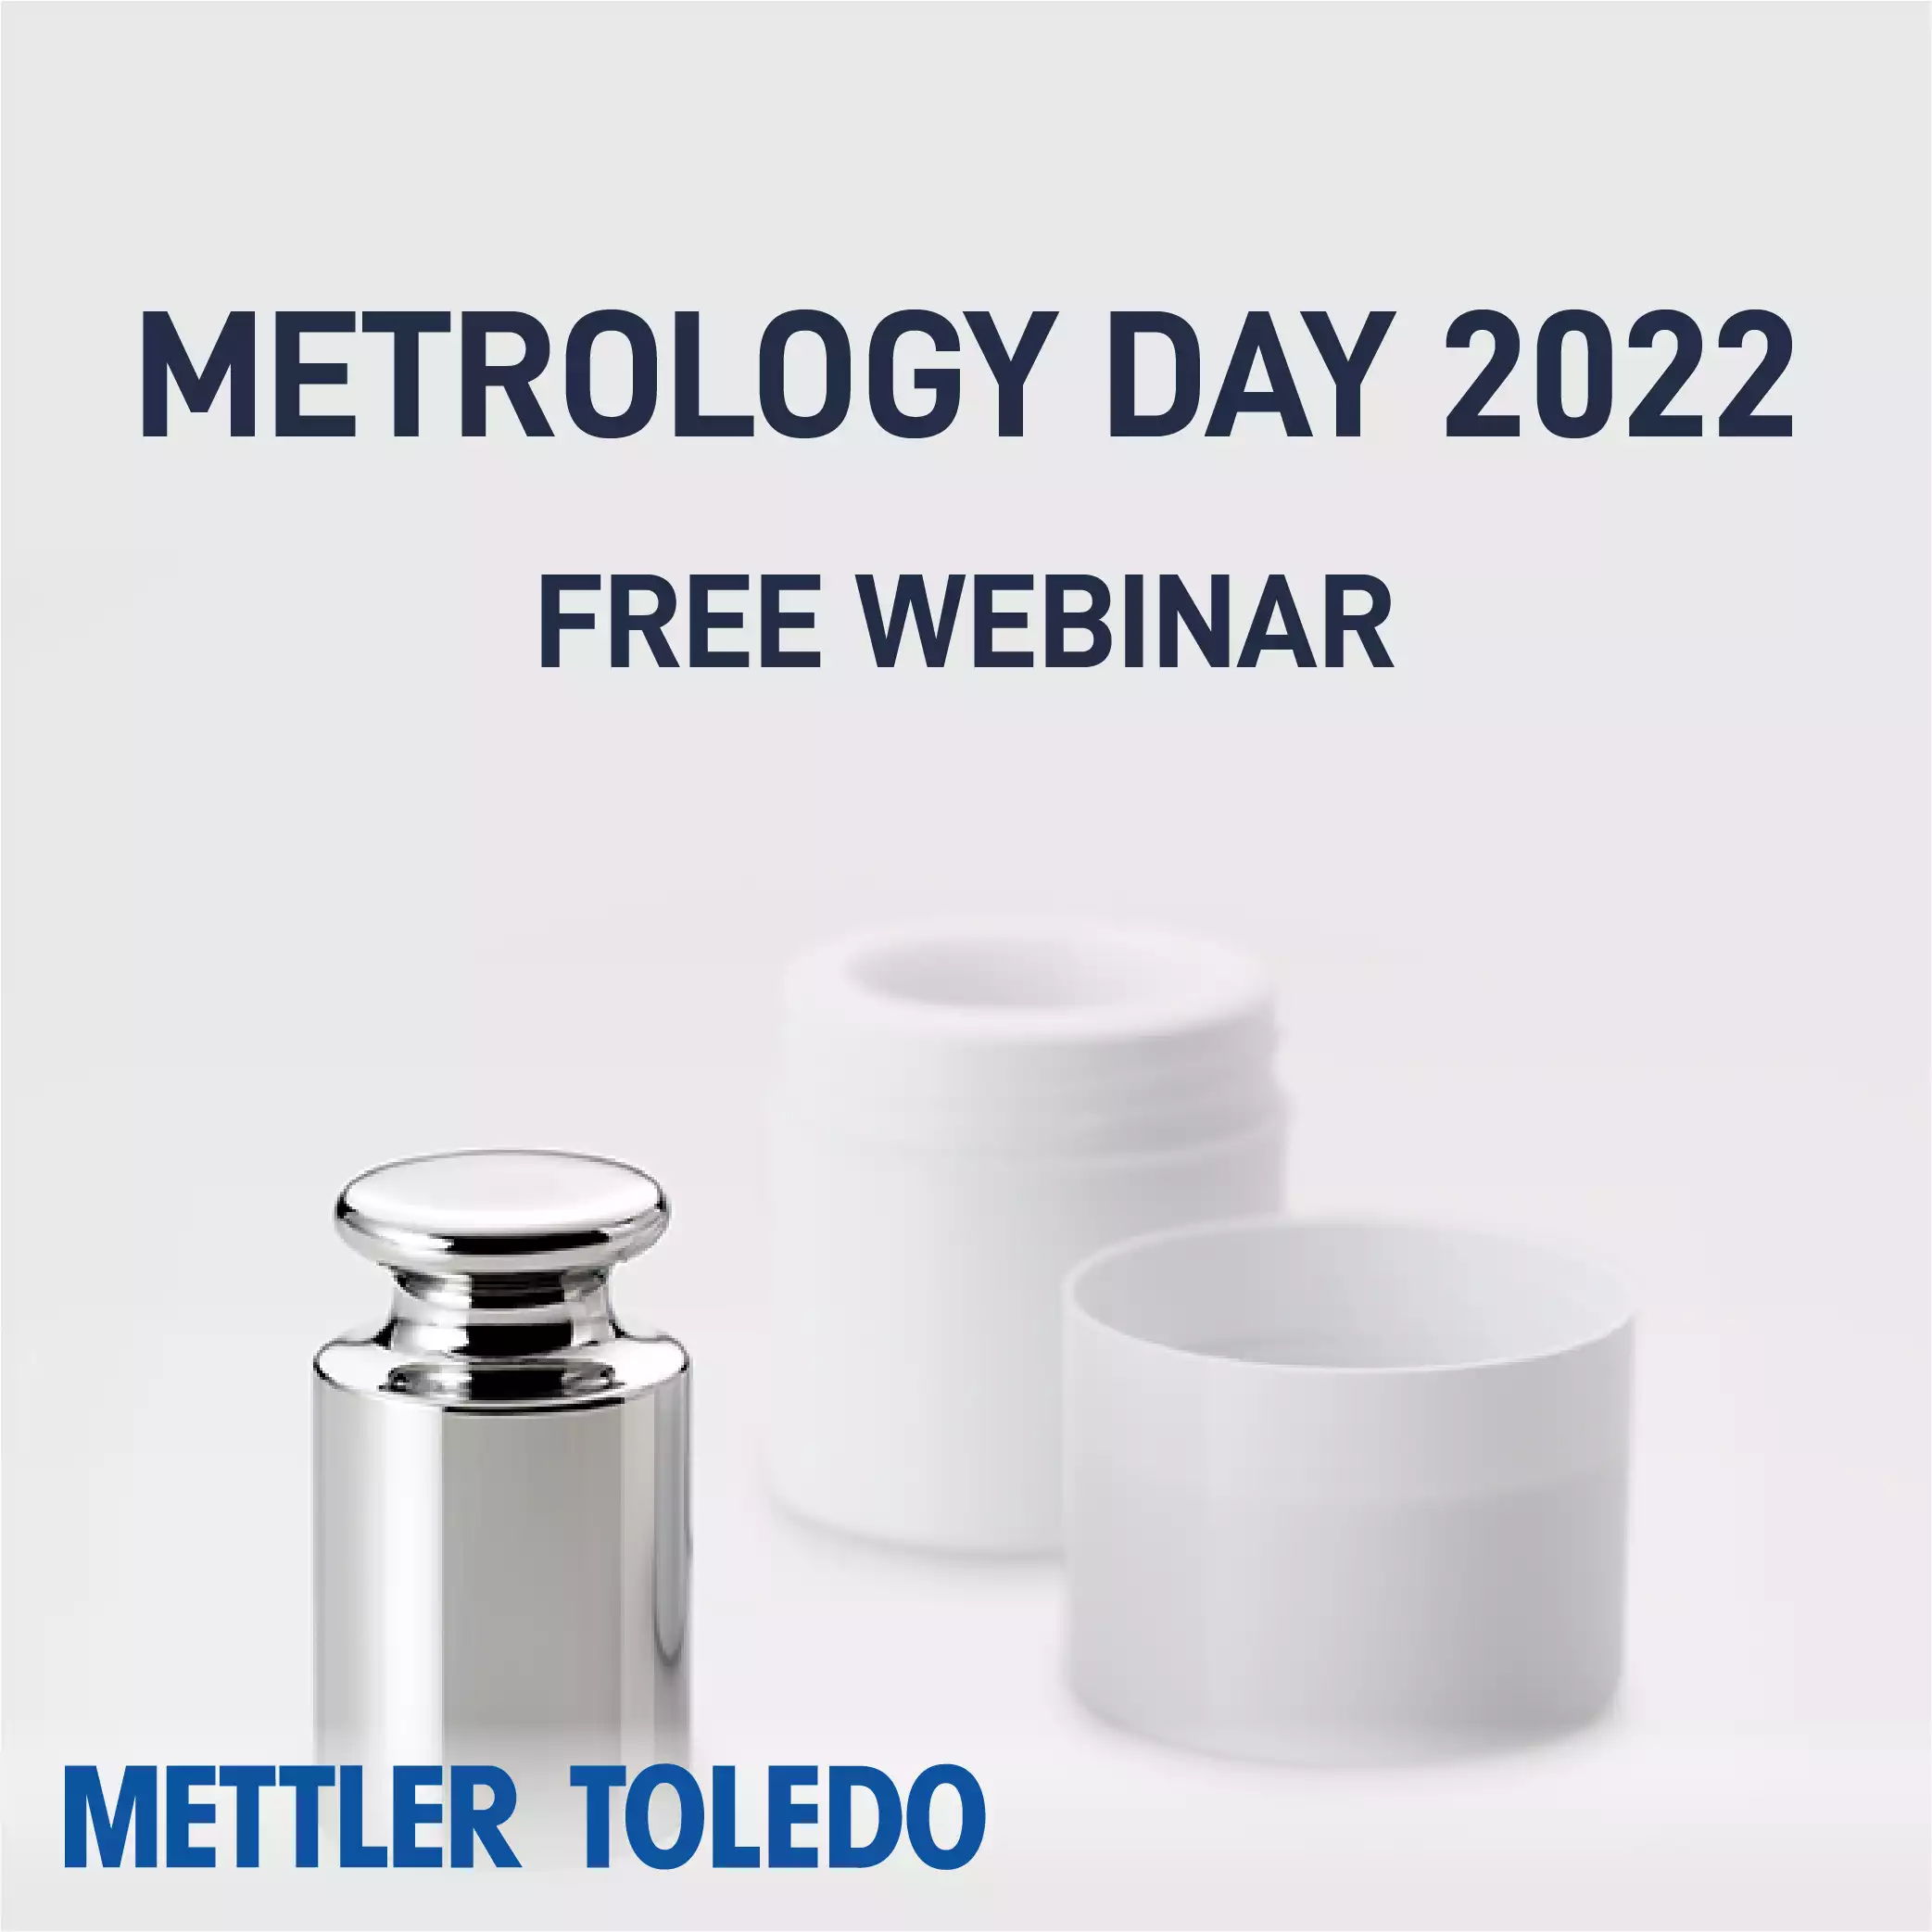 Metrology Day 2022 Event by Mettler Toledo